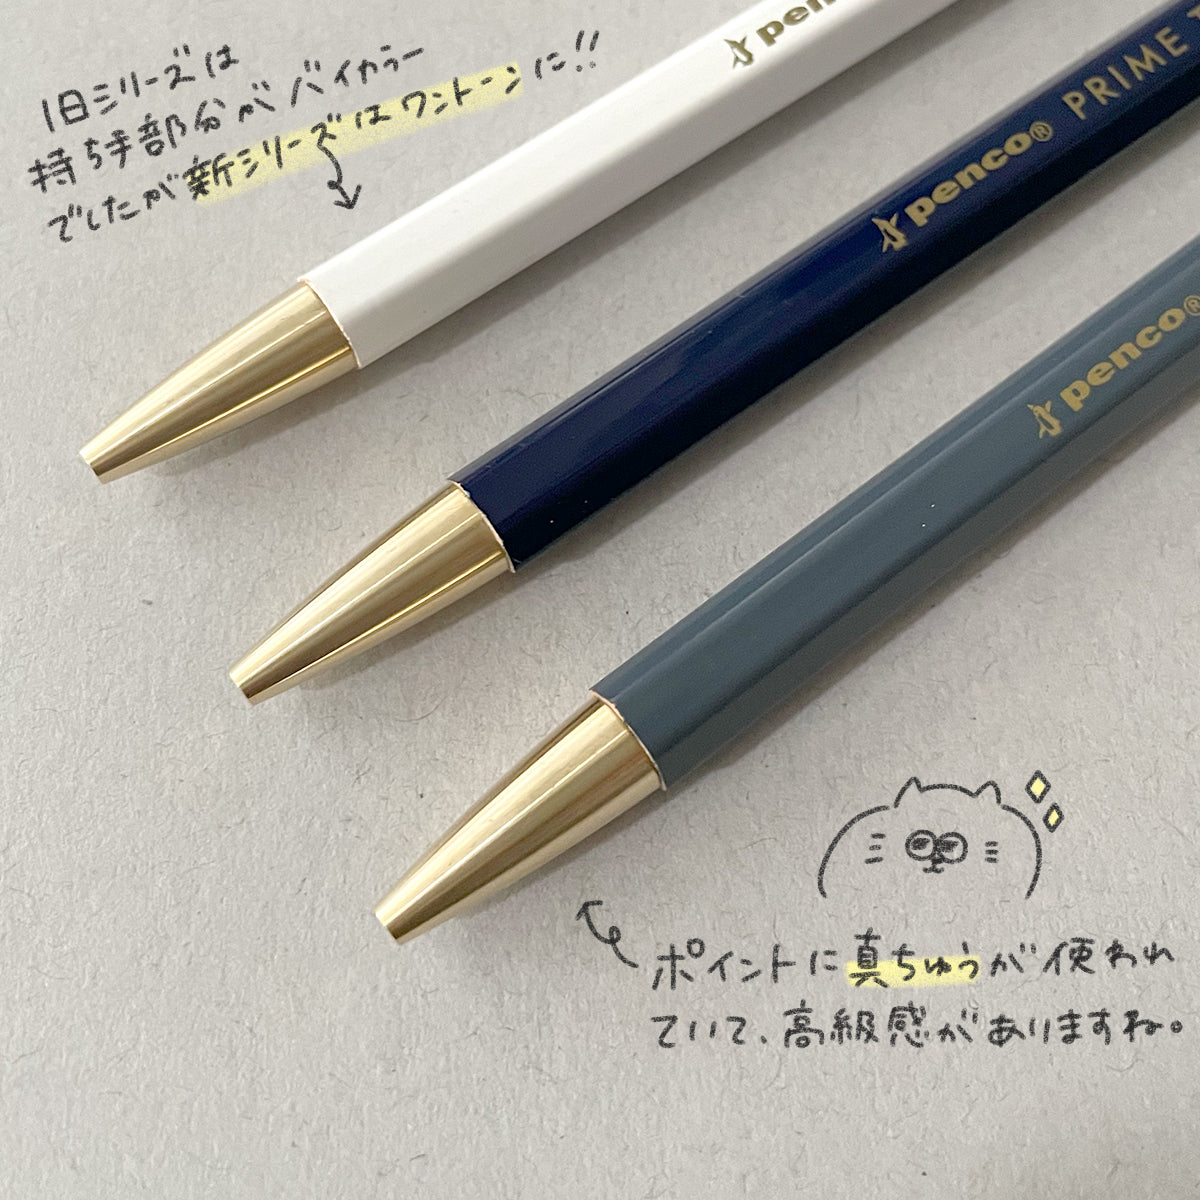 OHTO 公式ショップ シャープペン 鉛筆シャープ 鉛筆 木軸シャープペン 0.5mm 昭和レトロ 鉛筆 エシカル 天然木 大人も使えるシャープペン APS-250N ナチュラル